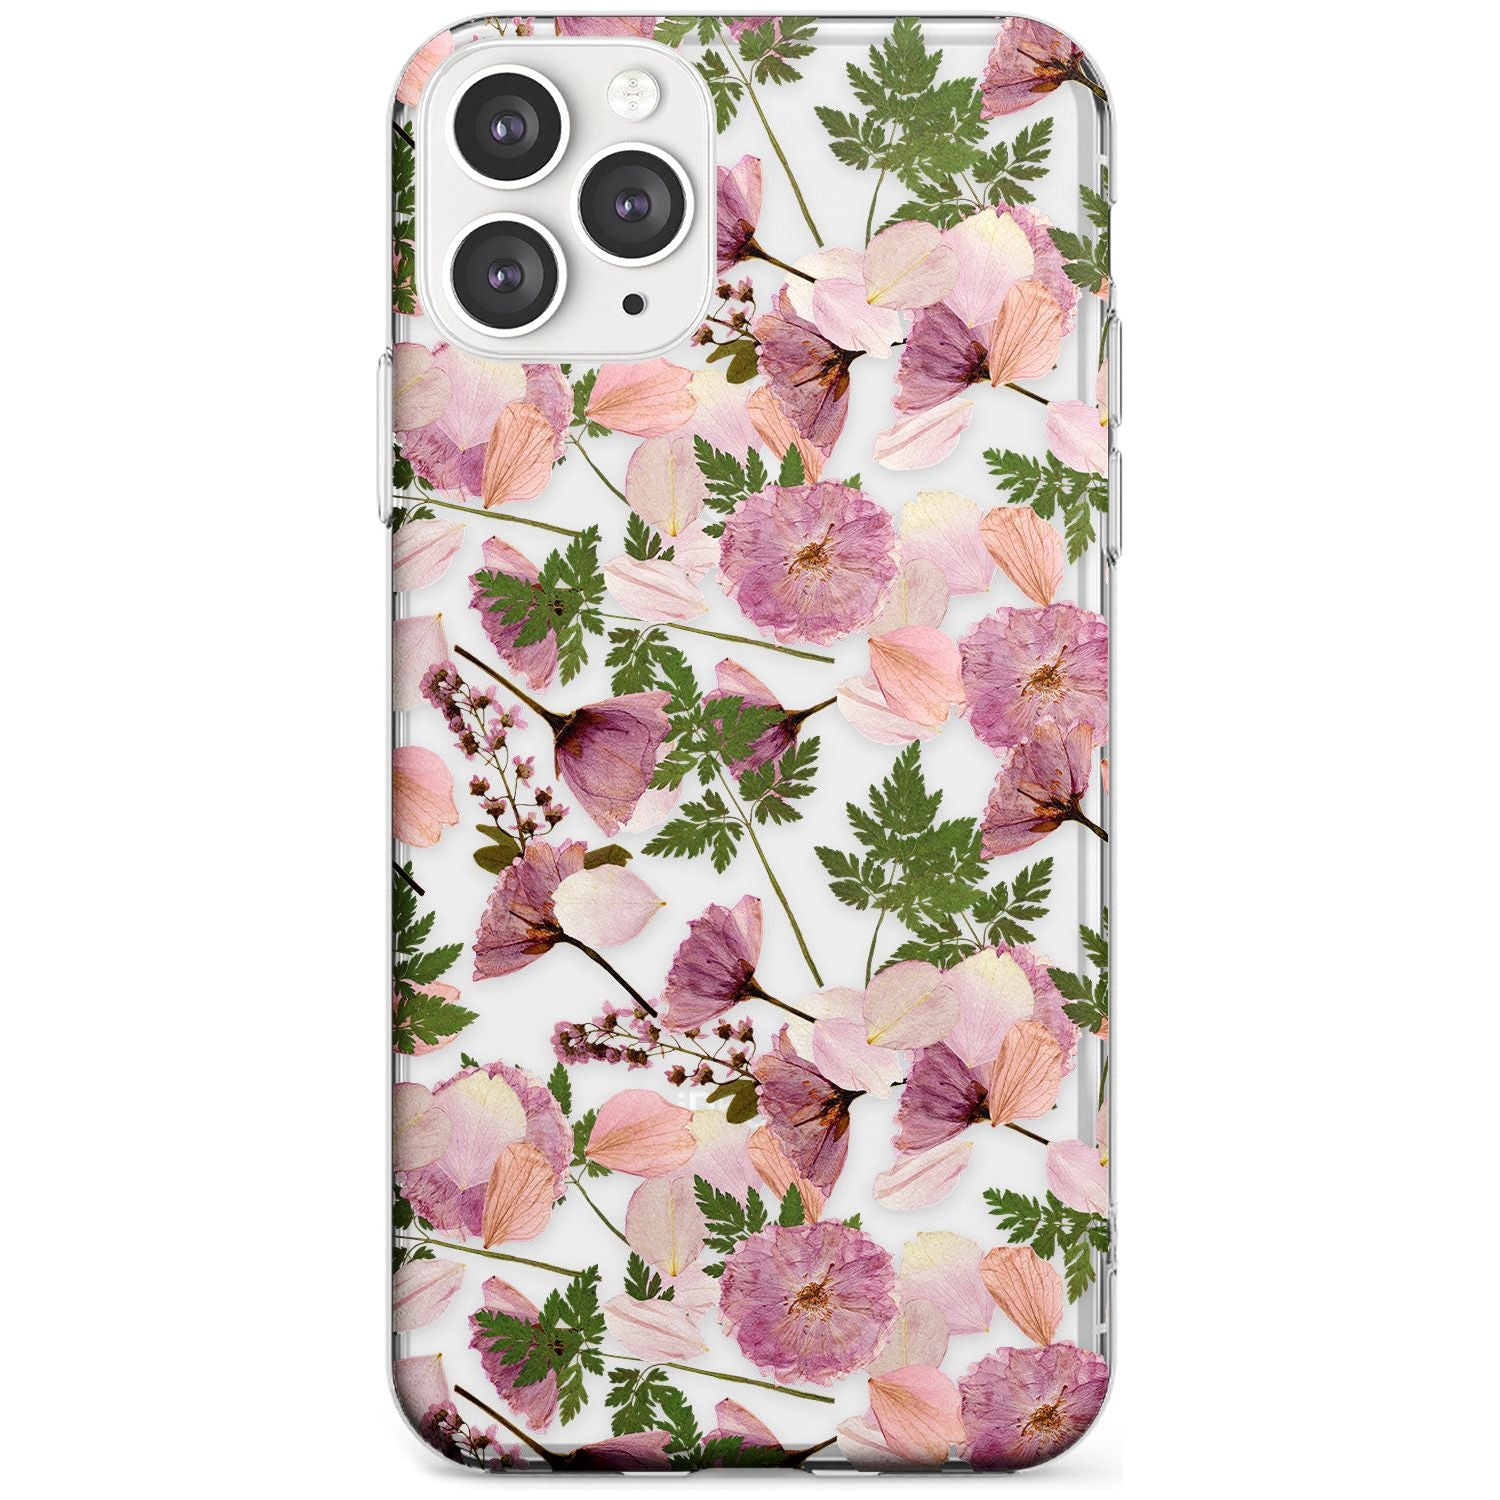 Leafy Floral Pattern Transparent Design Slim TPU Phone Case for iPhone 11 Pro Max